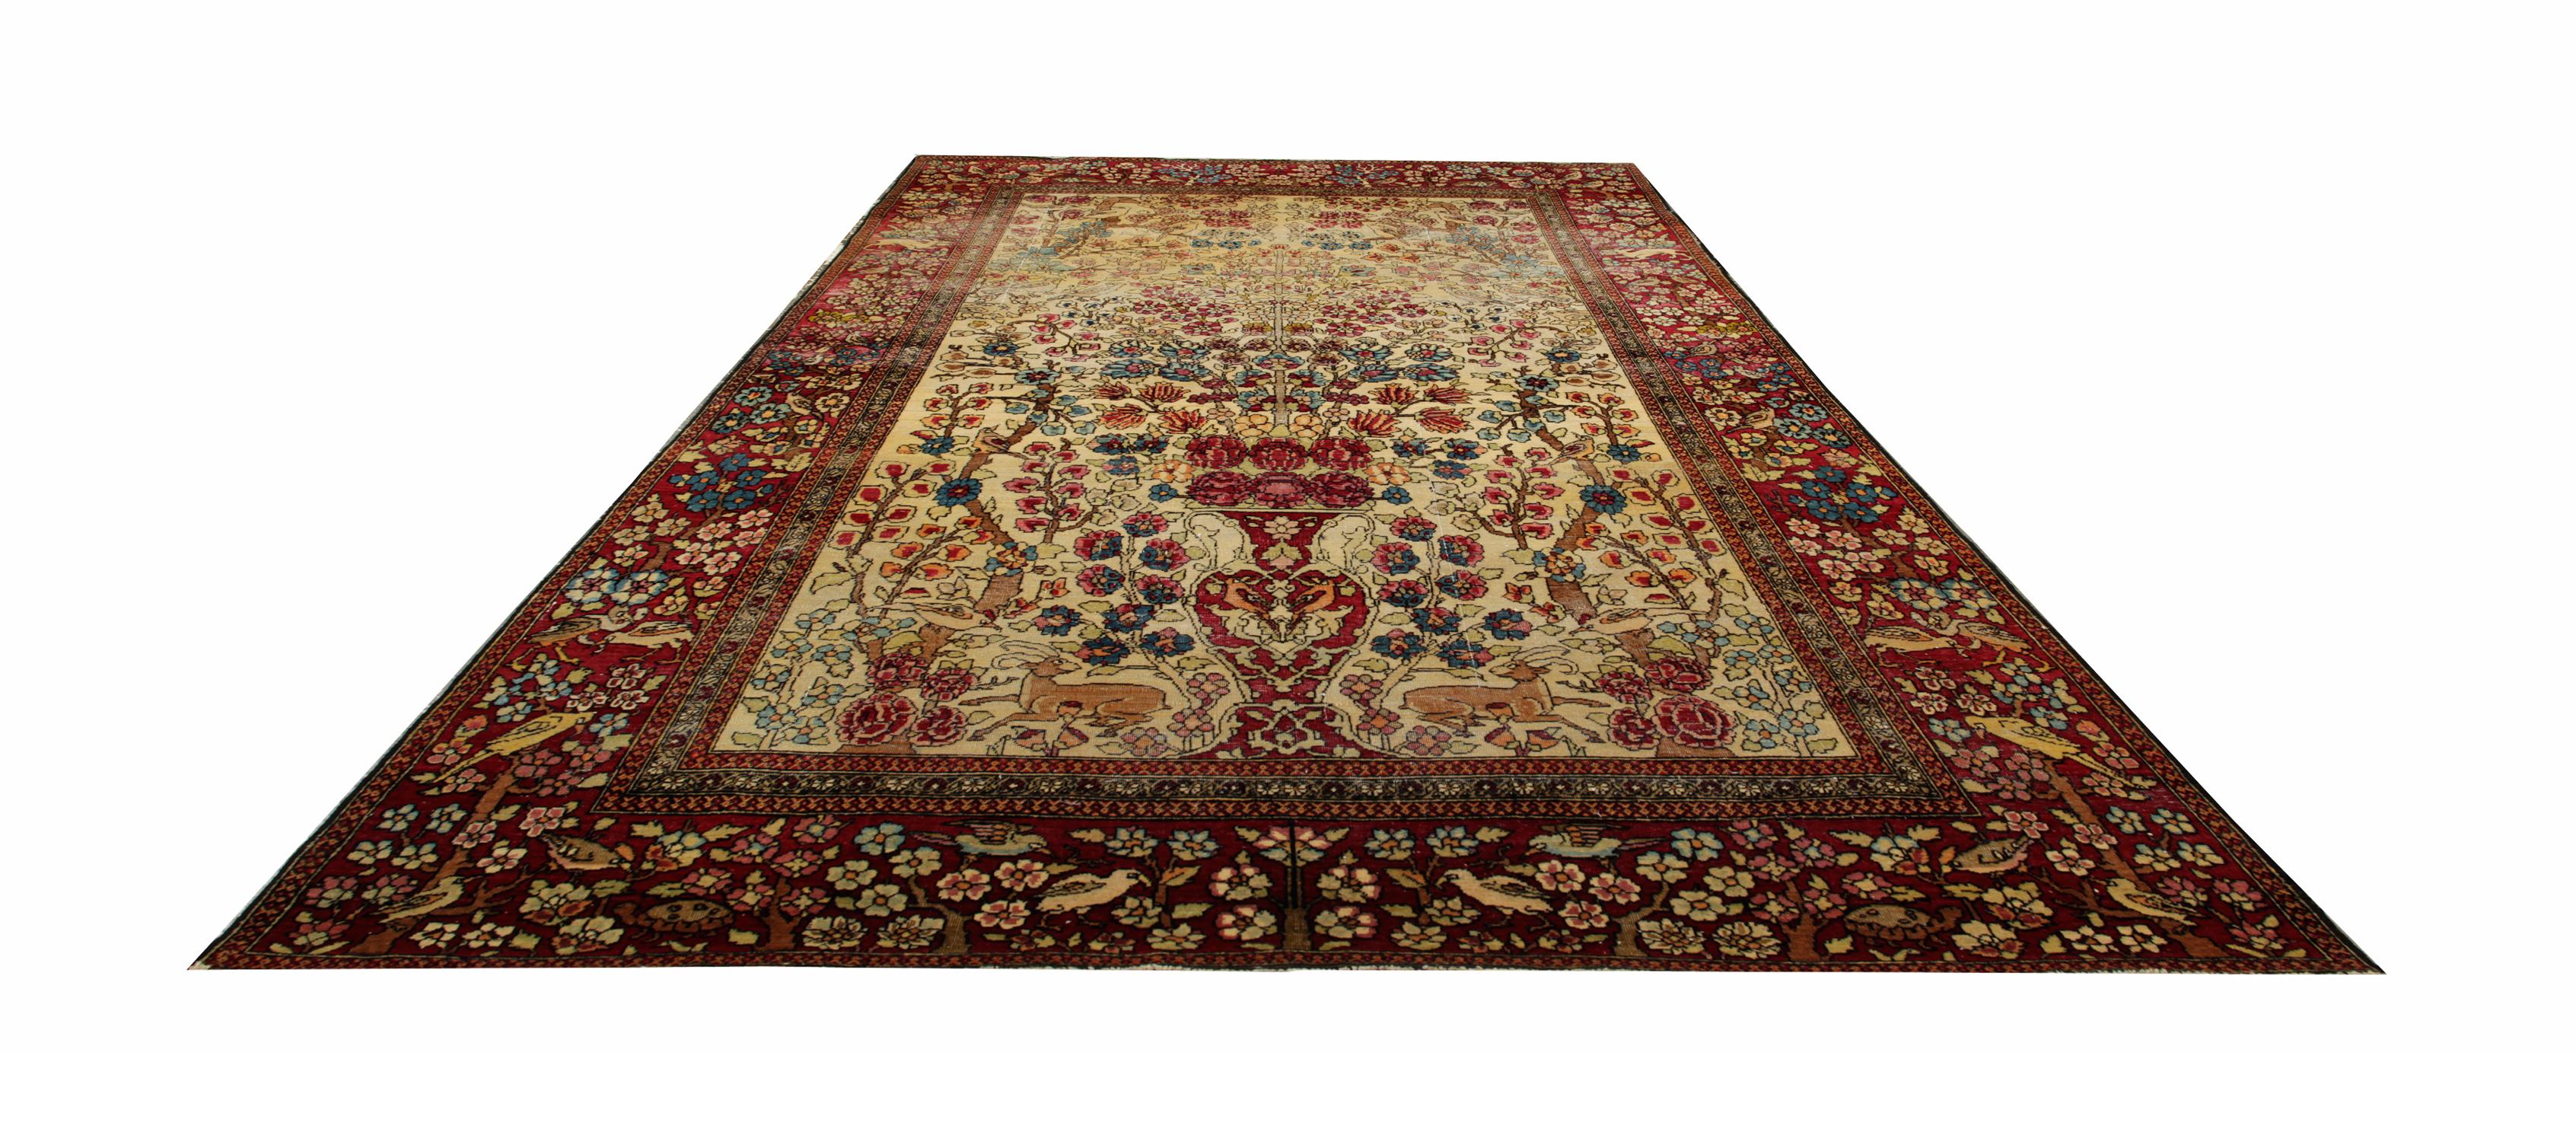 Caucasian Antique Floral Wool Area Rug Handmade Exclusive Living Room Carpet- 125x197cm For Sale